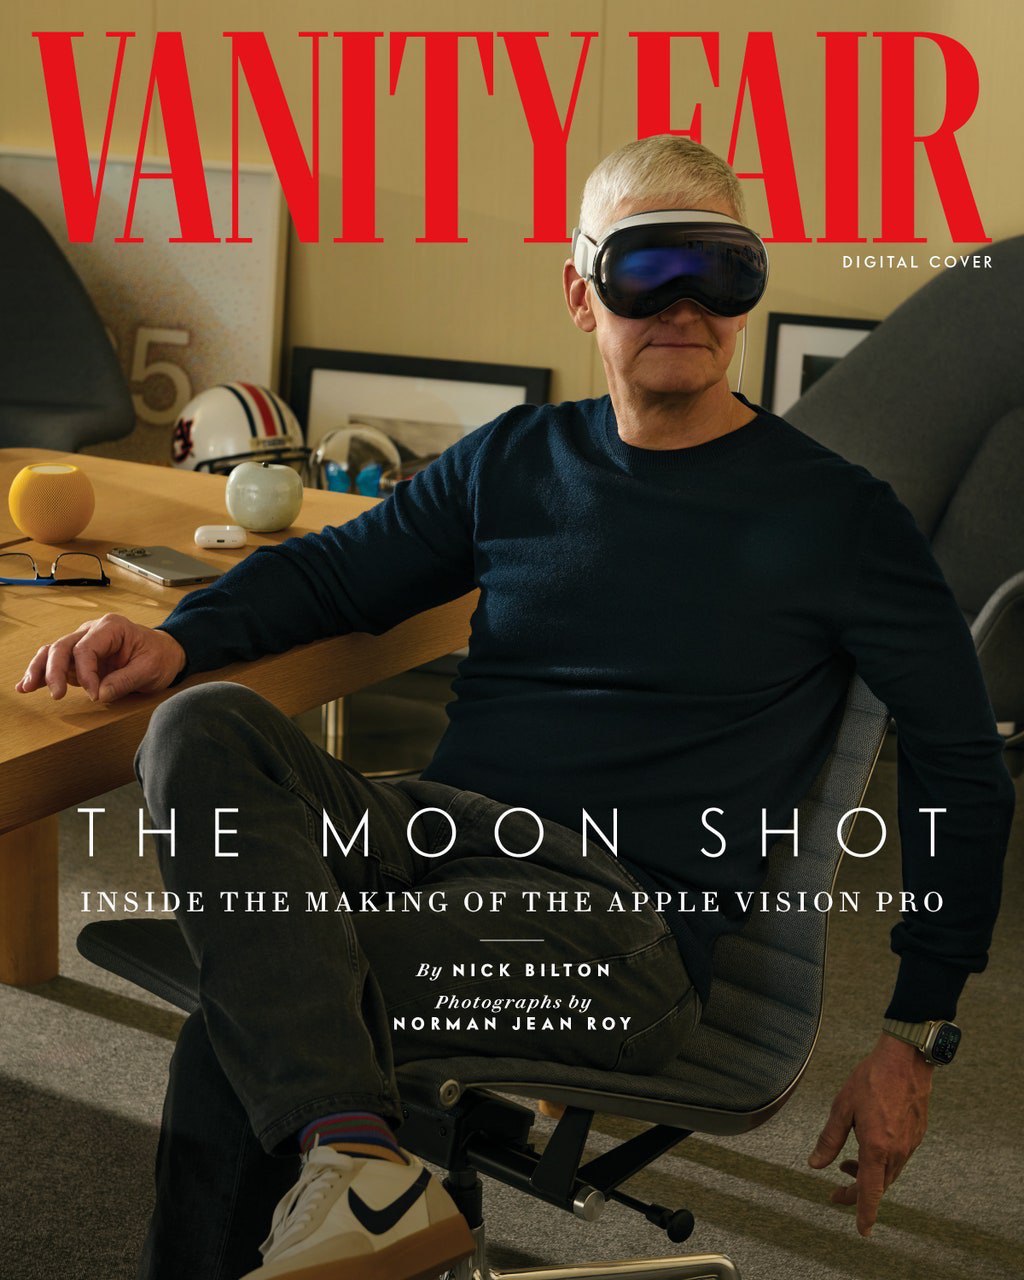 Обложка журнала с Тимом Куком и Apple Vision Pro, интервью Ника Билтона (© VanityFair)